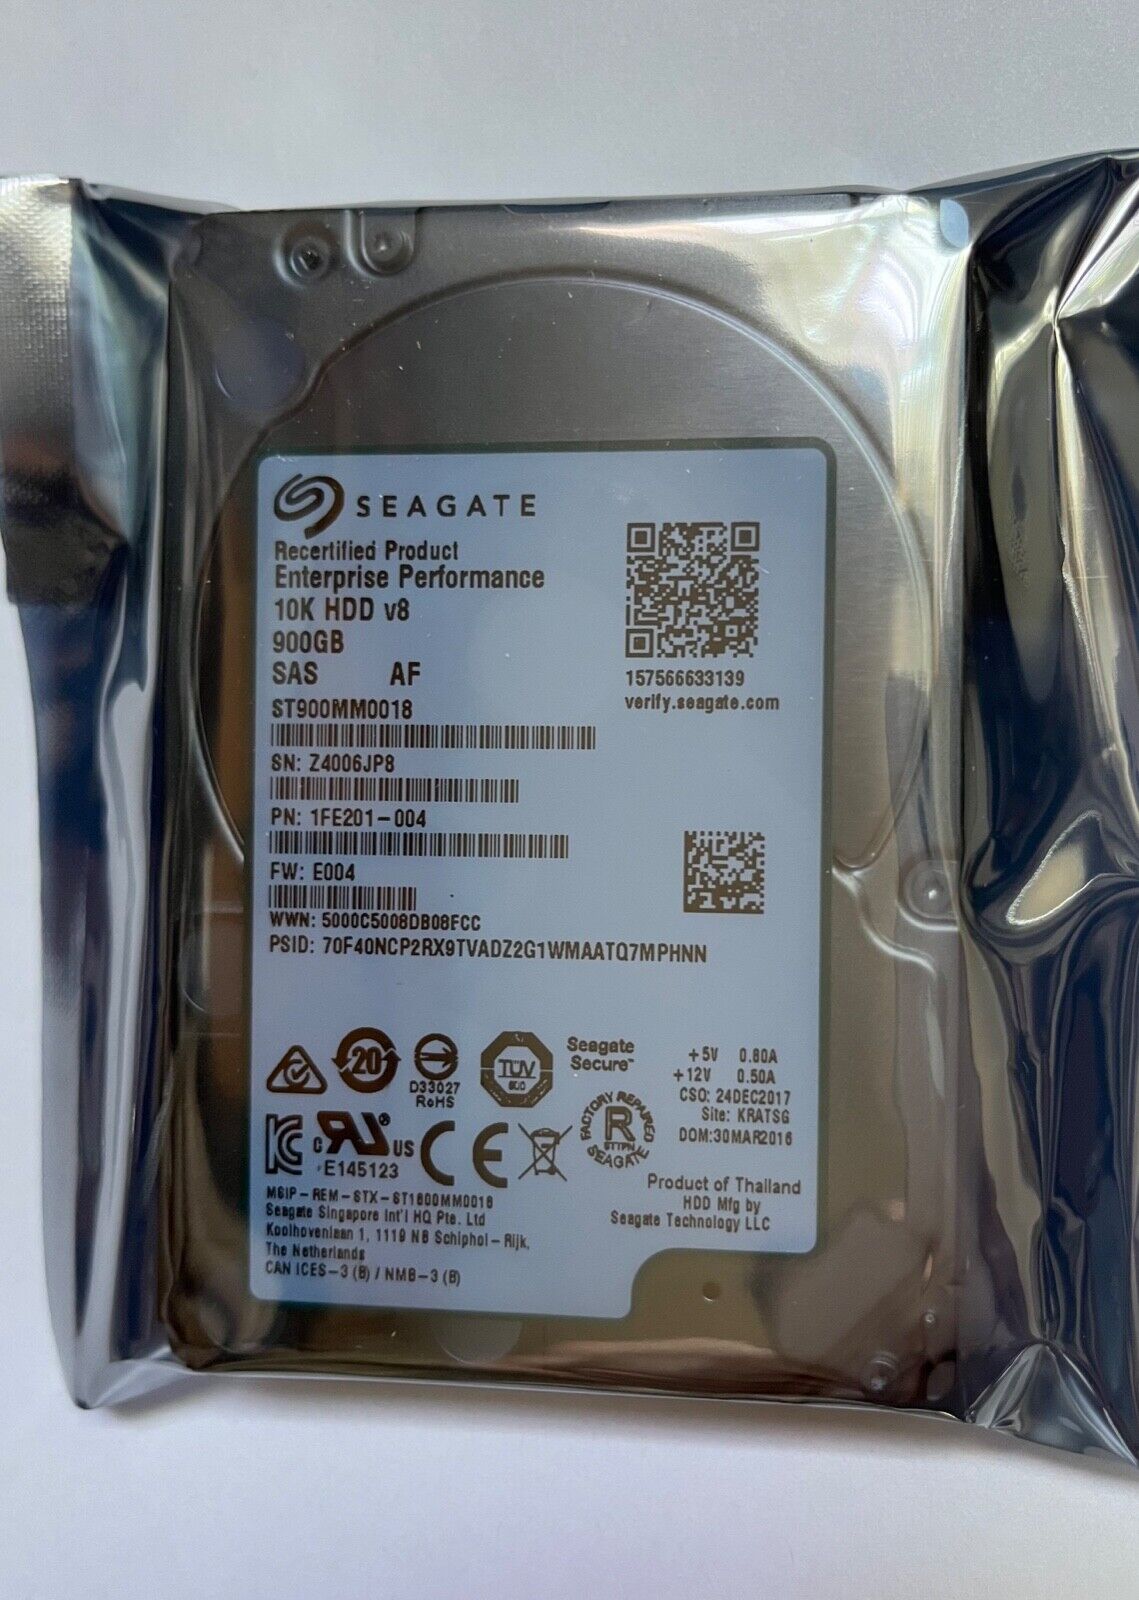 Seagate ST900MM0018 Enterprise Performance 10K HDD - 900GB